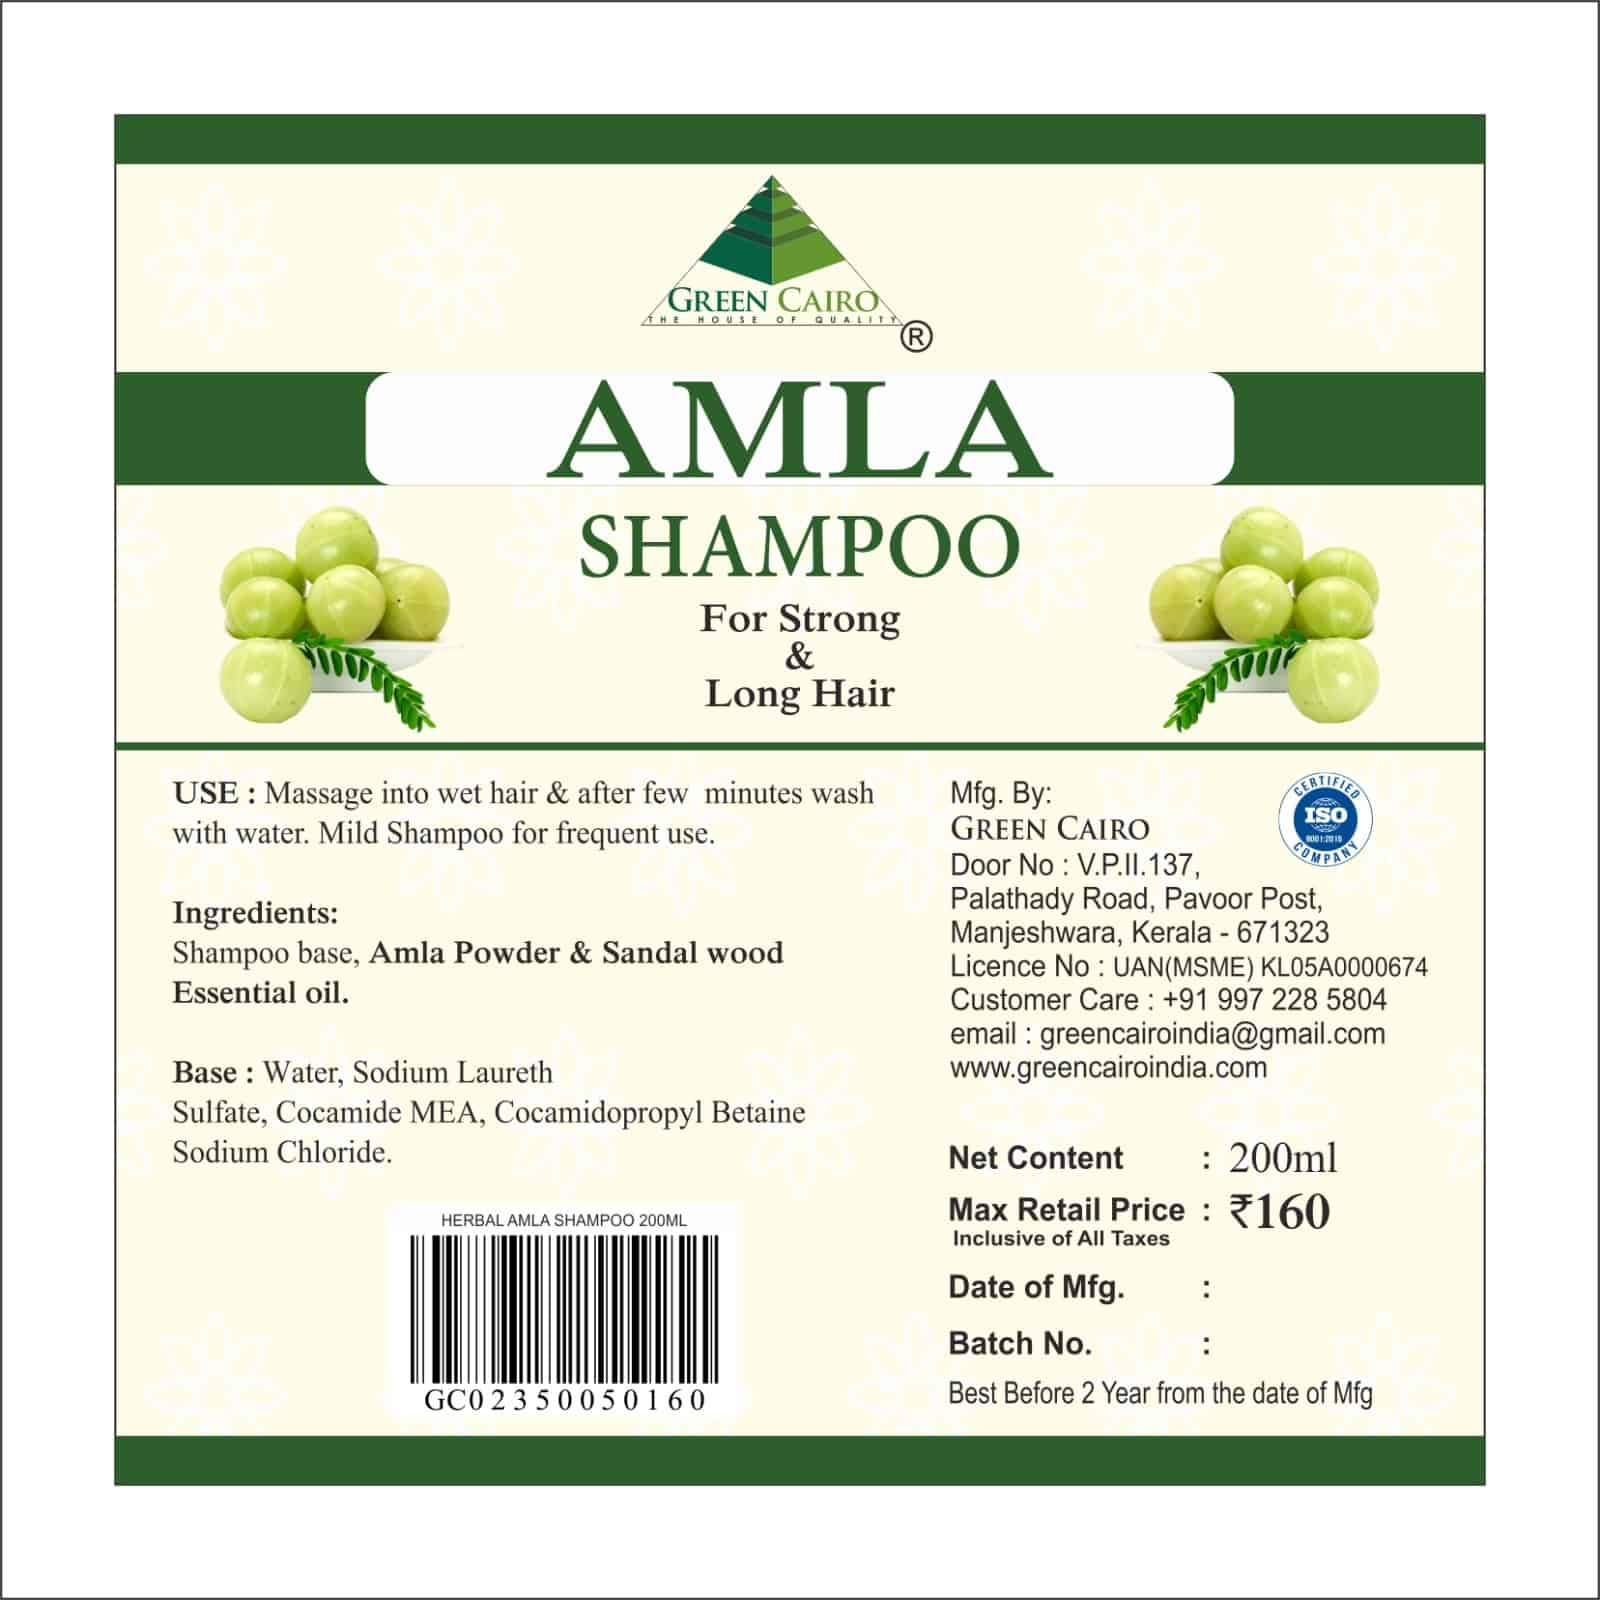 Amla Shampoo 200ml - get healthy, long and strong hairs - Green Cairo